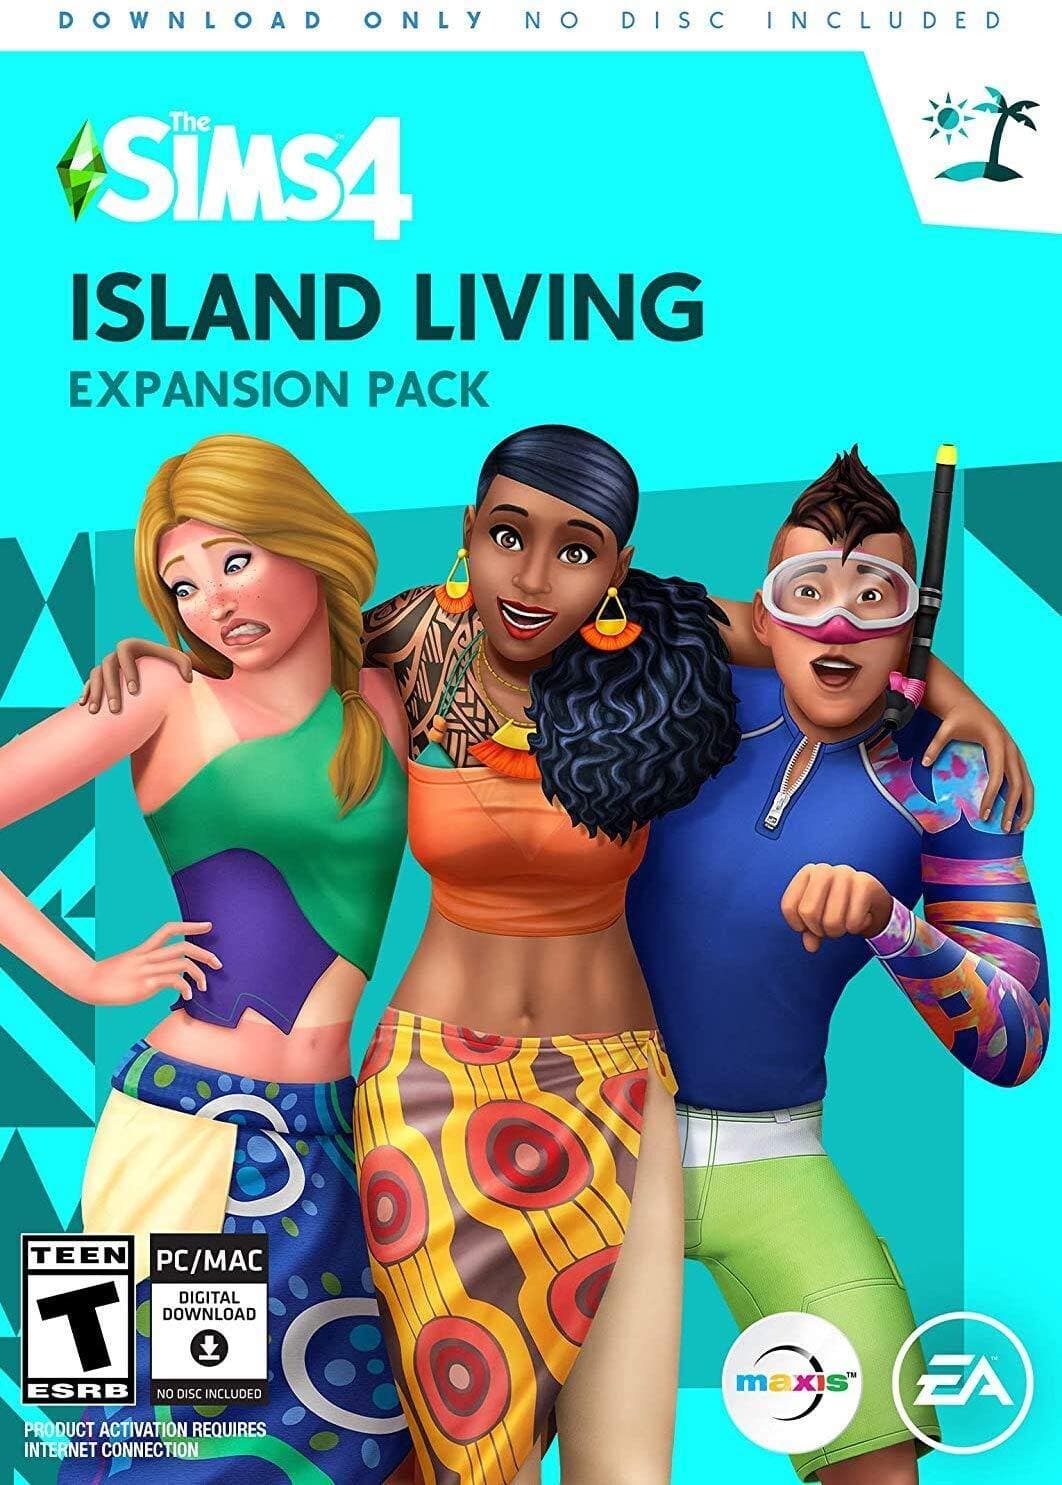 The Sims 4: Island Living - למחשב - EXON - גיימינג ותוכנות - משחקים ותוכנות למחשב ולאקס בוקס!